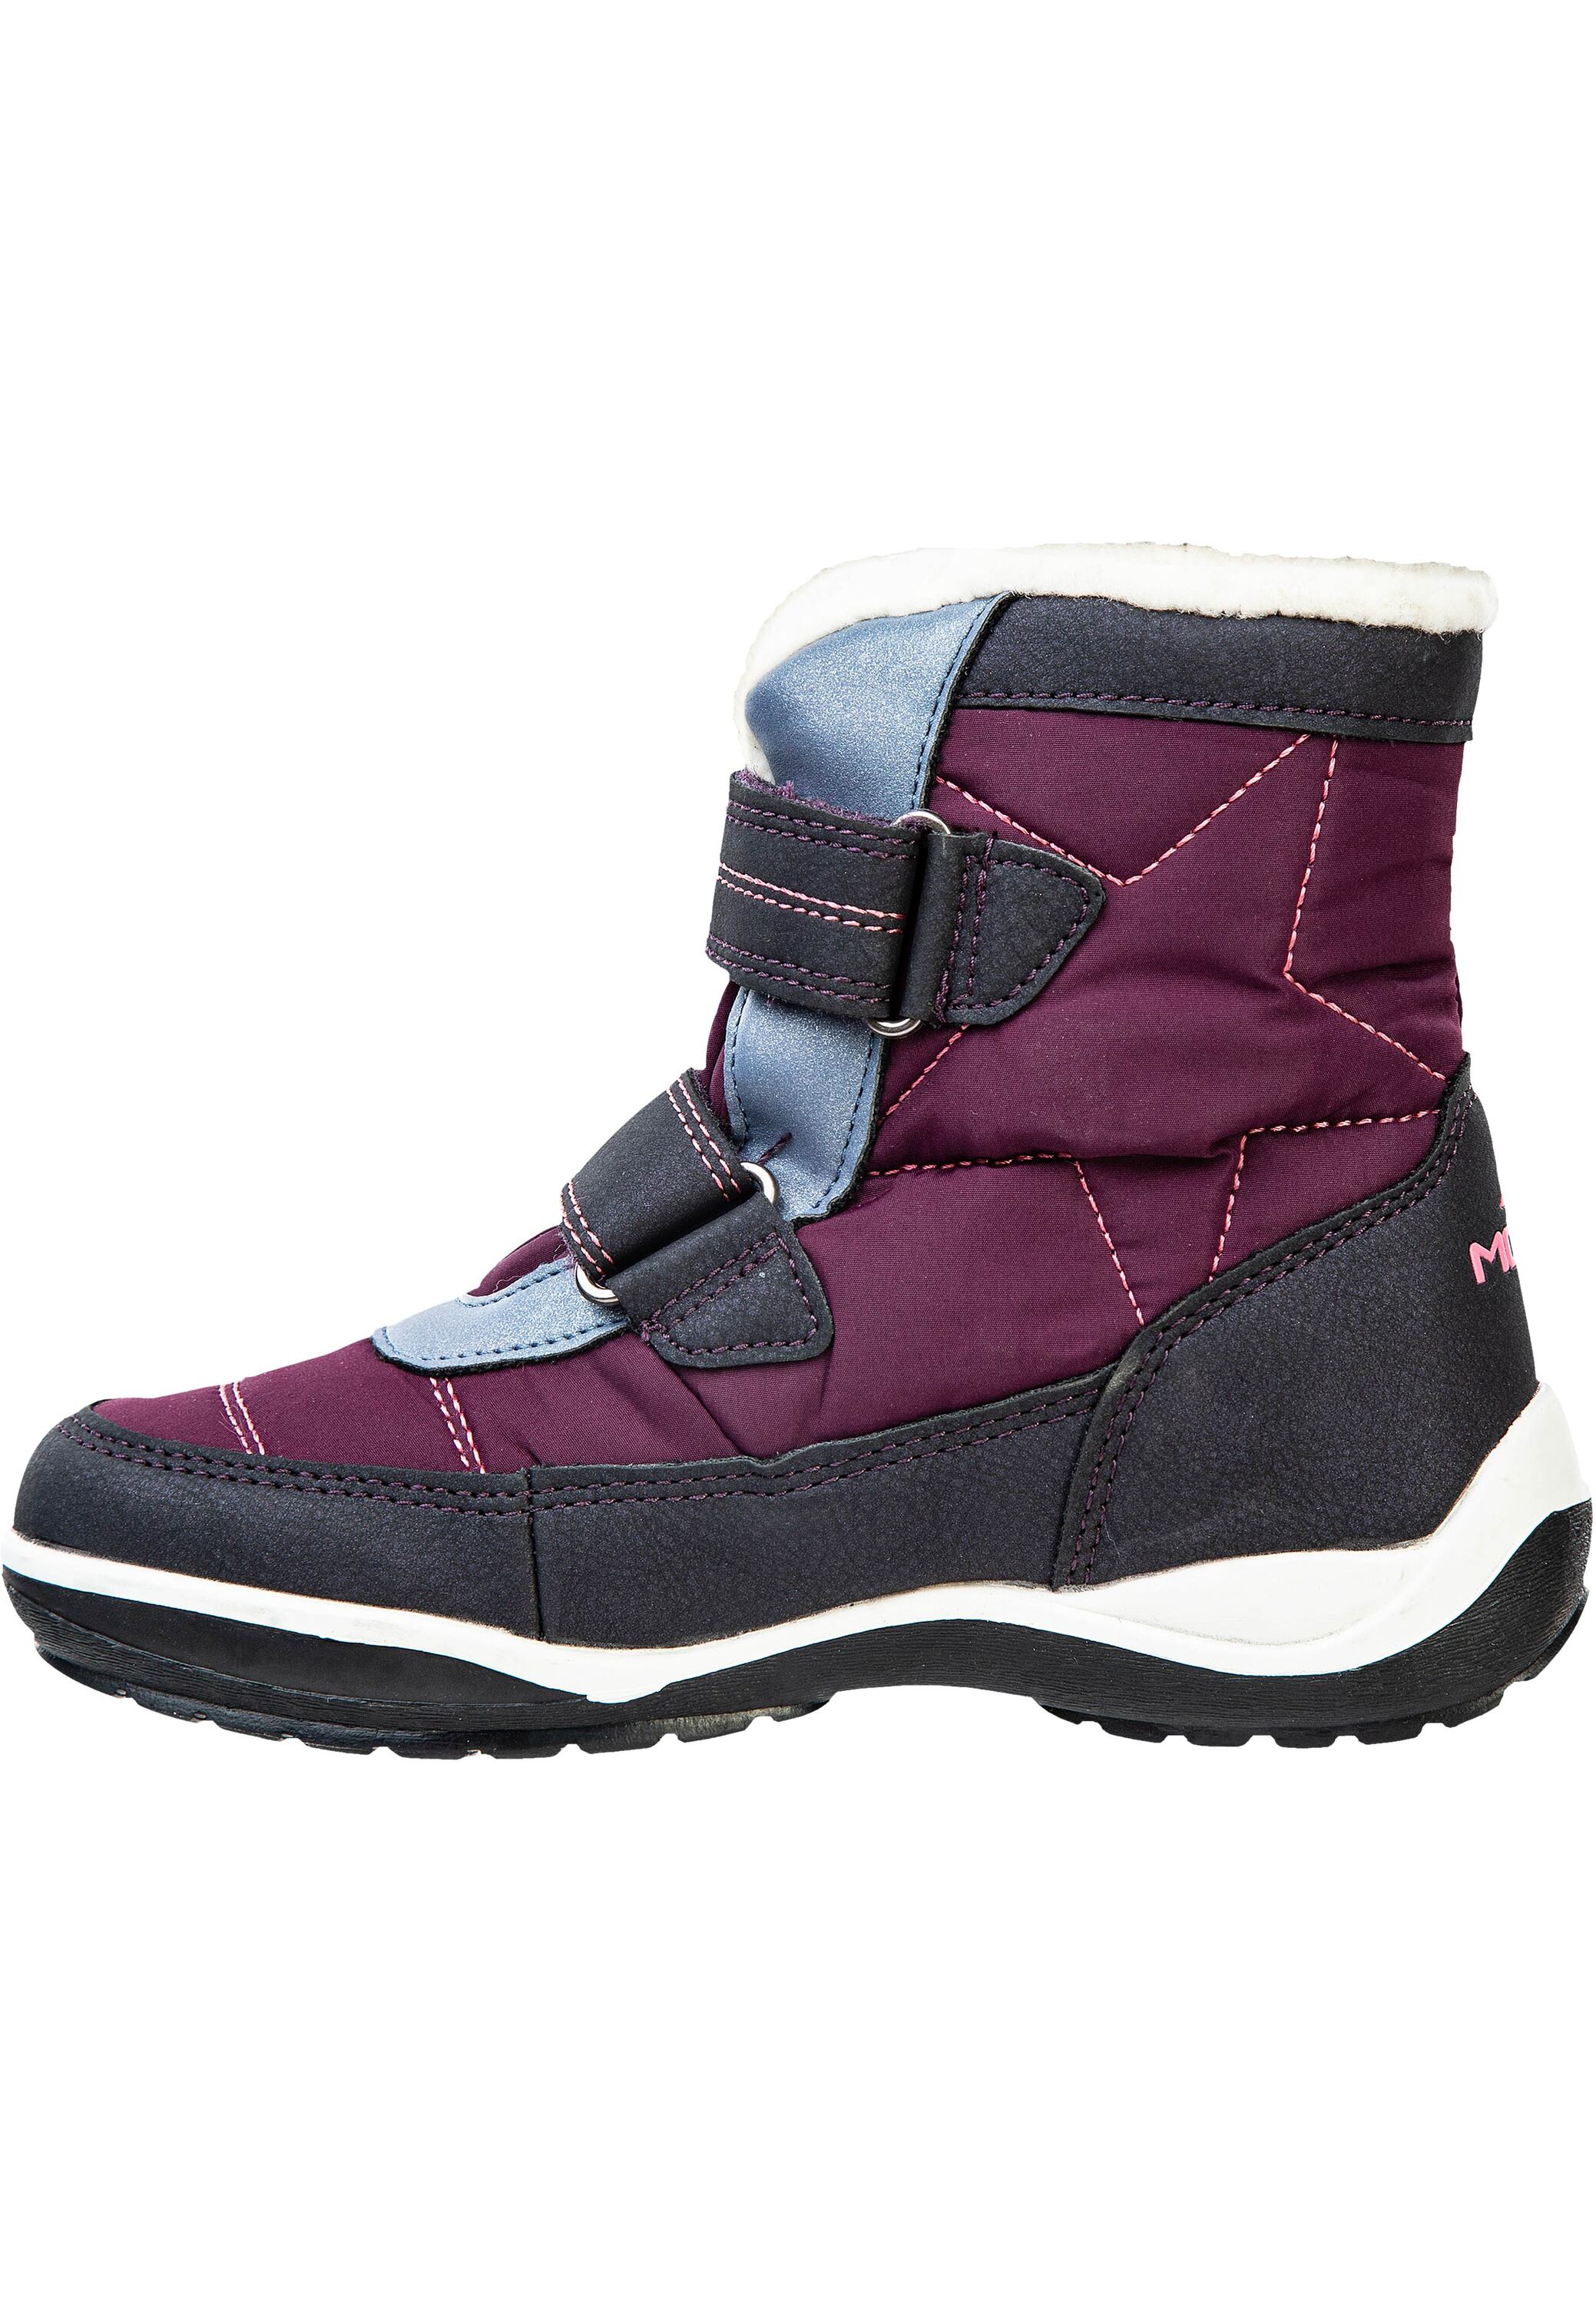 ботинки mols boots sannata цвет 4081 potent purple Ботинки Mols Boots Sannata, цвет 4081 Potent Purple